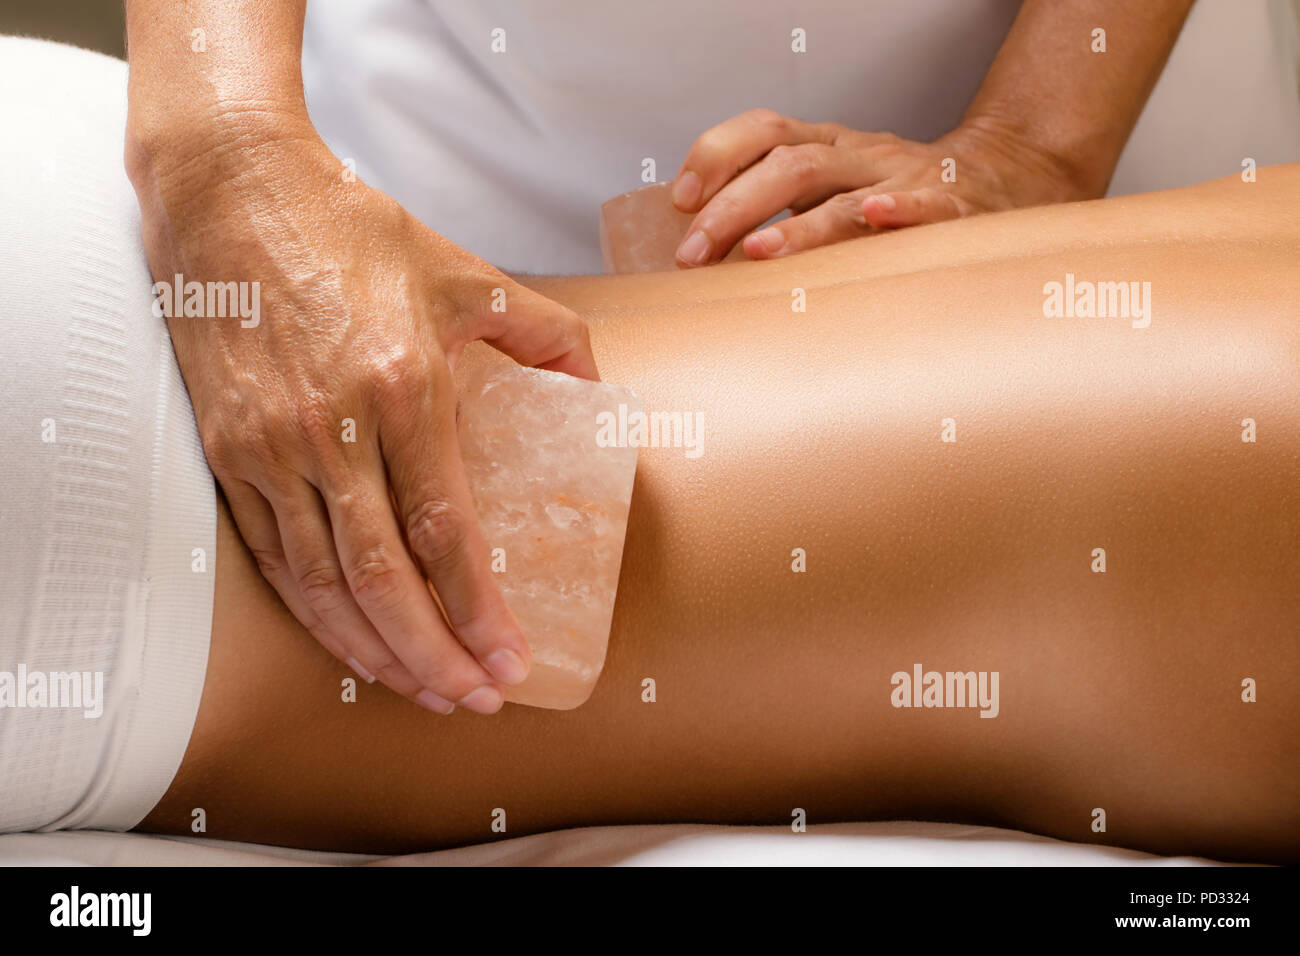 Close up detail of himalayan salt stone massage. Therapist massaging lower back of woman with hot salt brick. Stock Photo